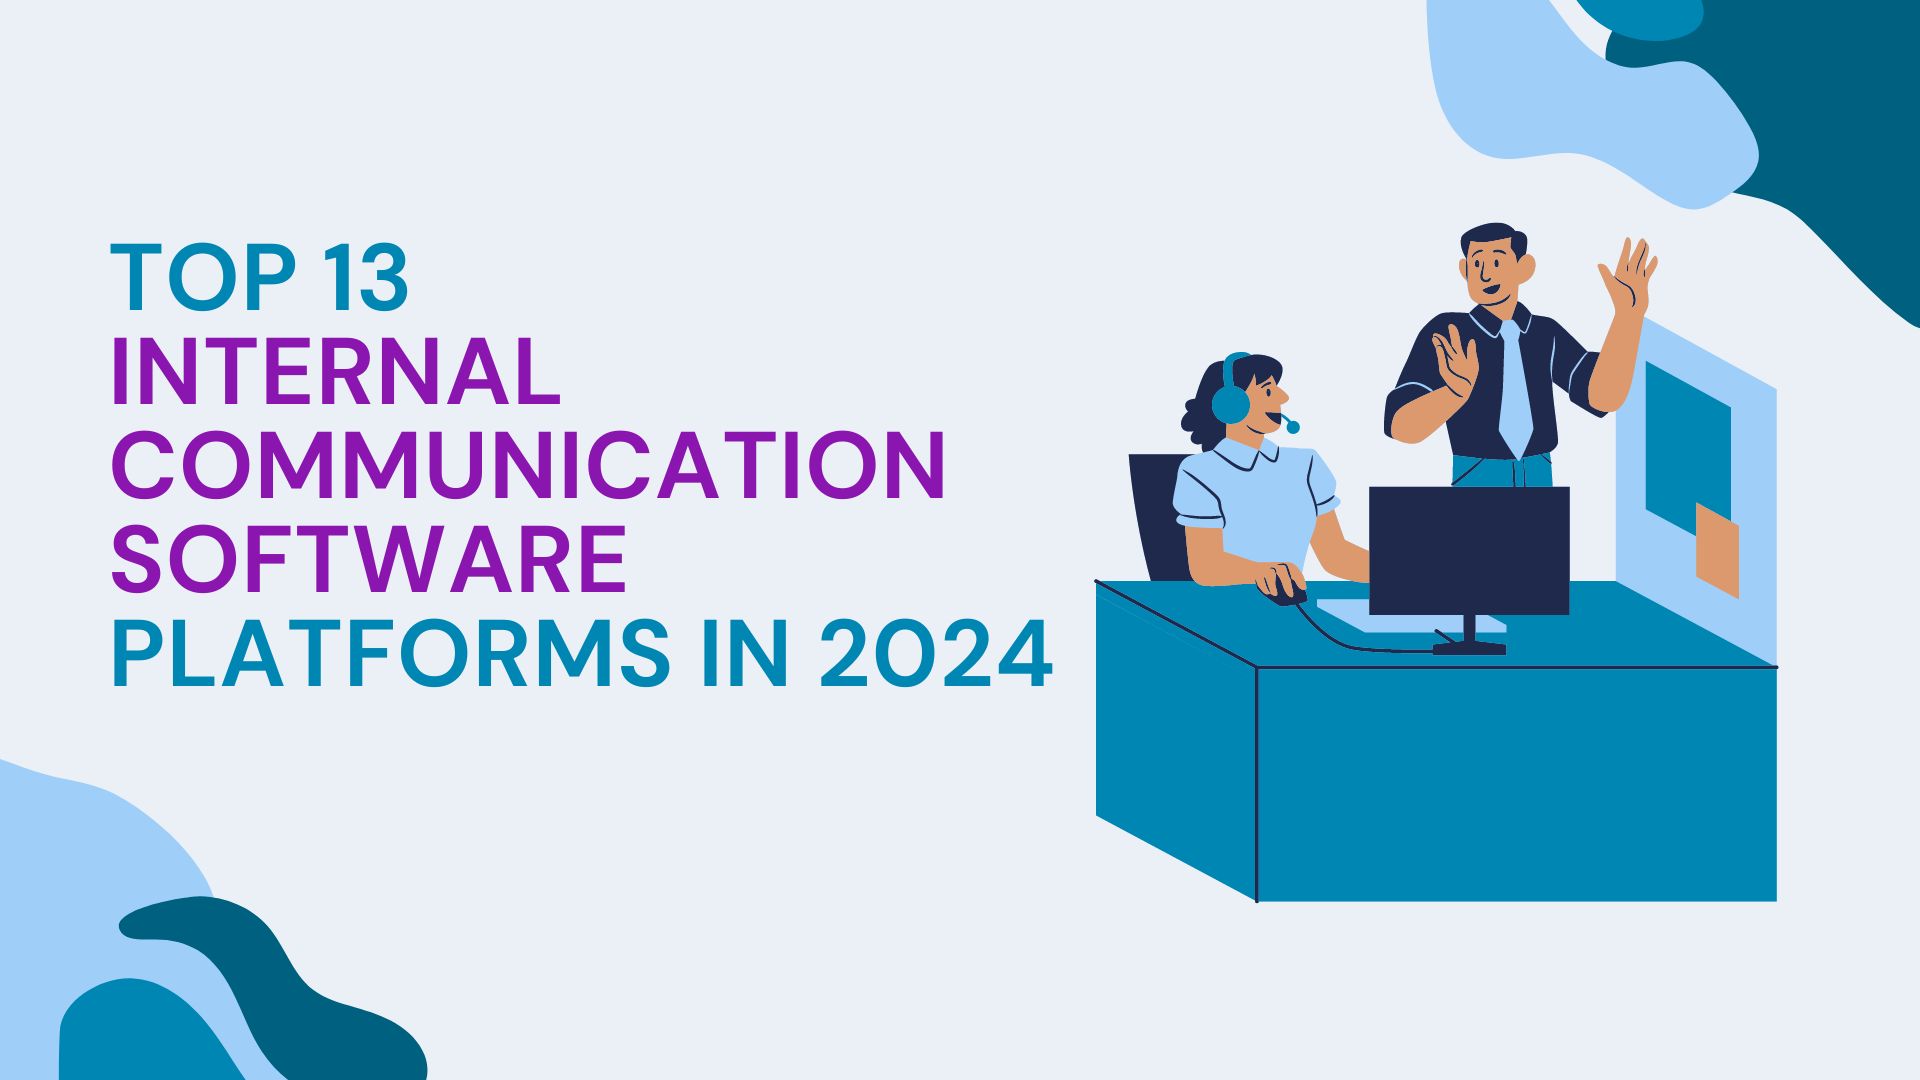 Top 13 Internal Communication Software Platforms in 2024